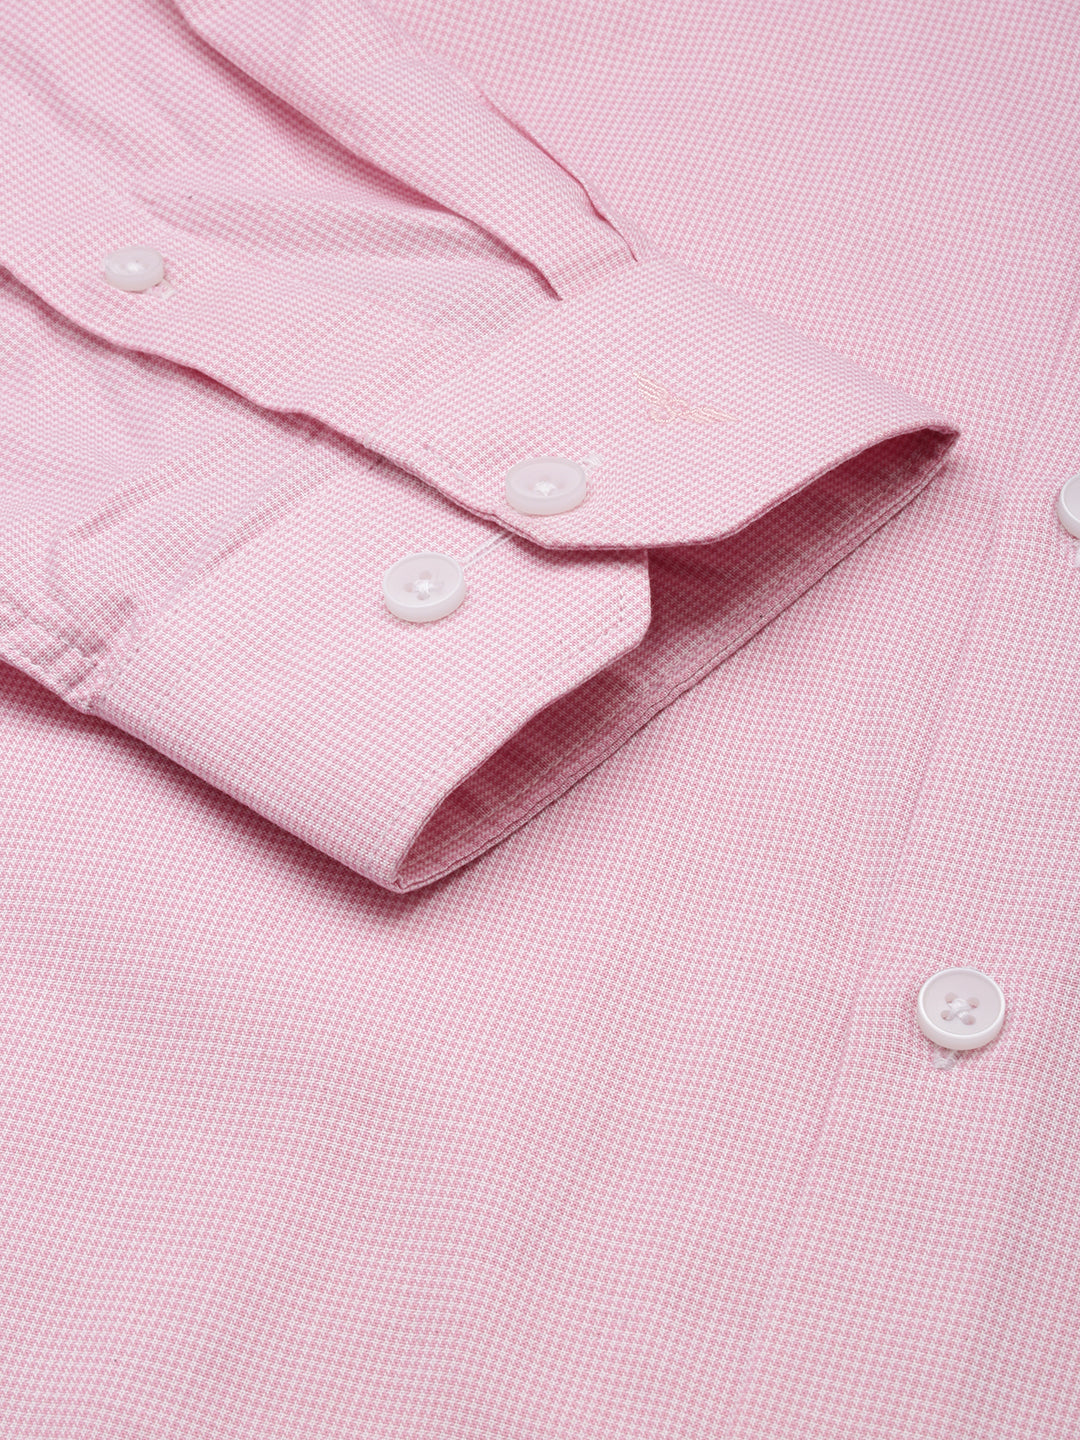 Men Pink Checked Formal Shirt